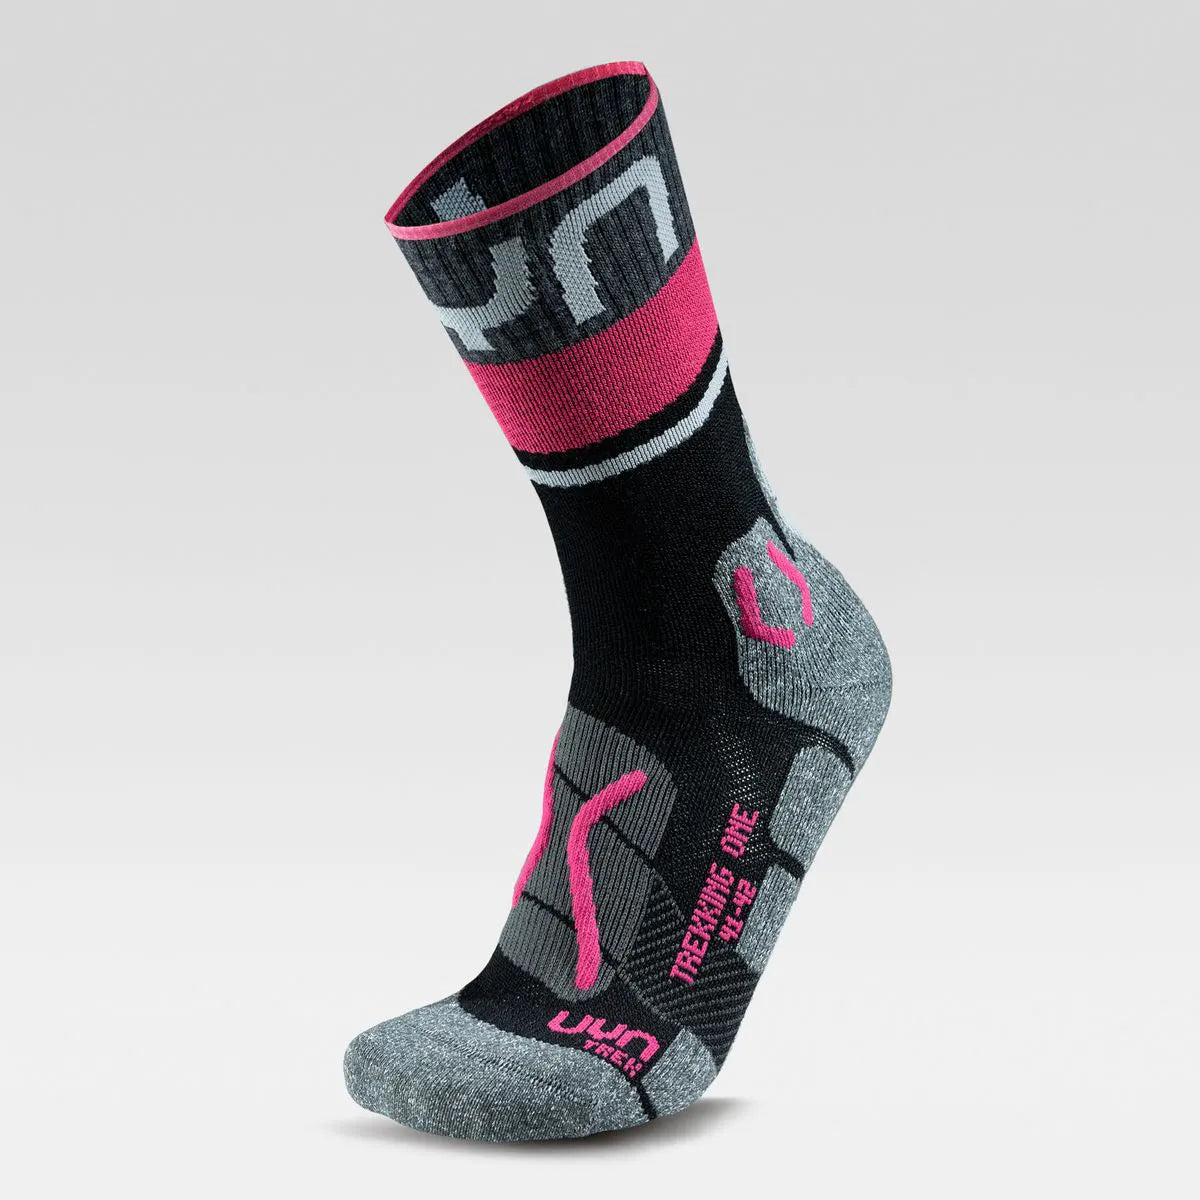 UYN Trekking One merino Socks - Black/Pink (Unisex)